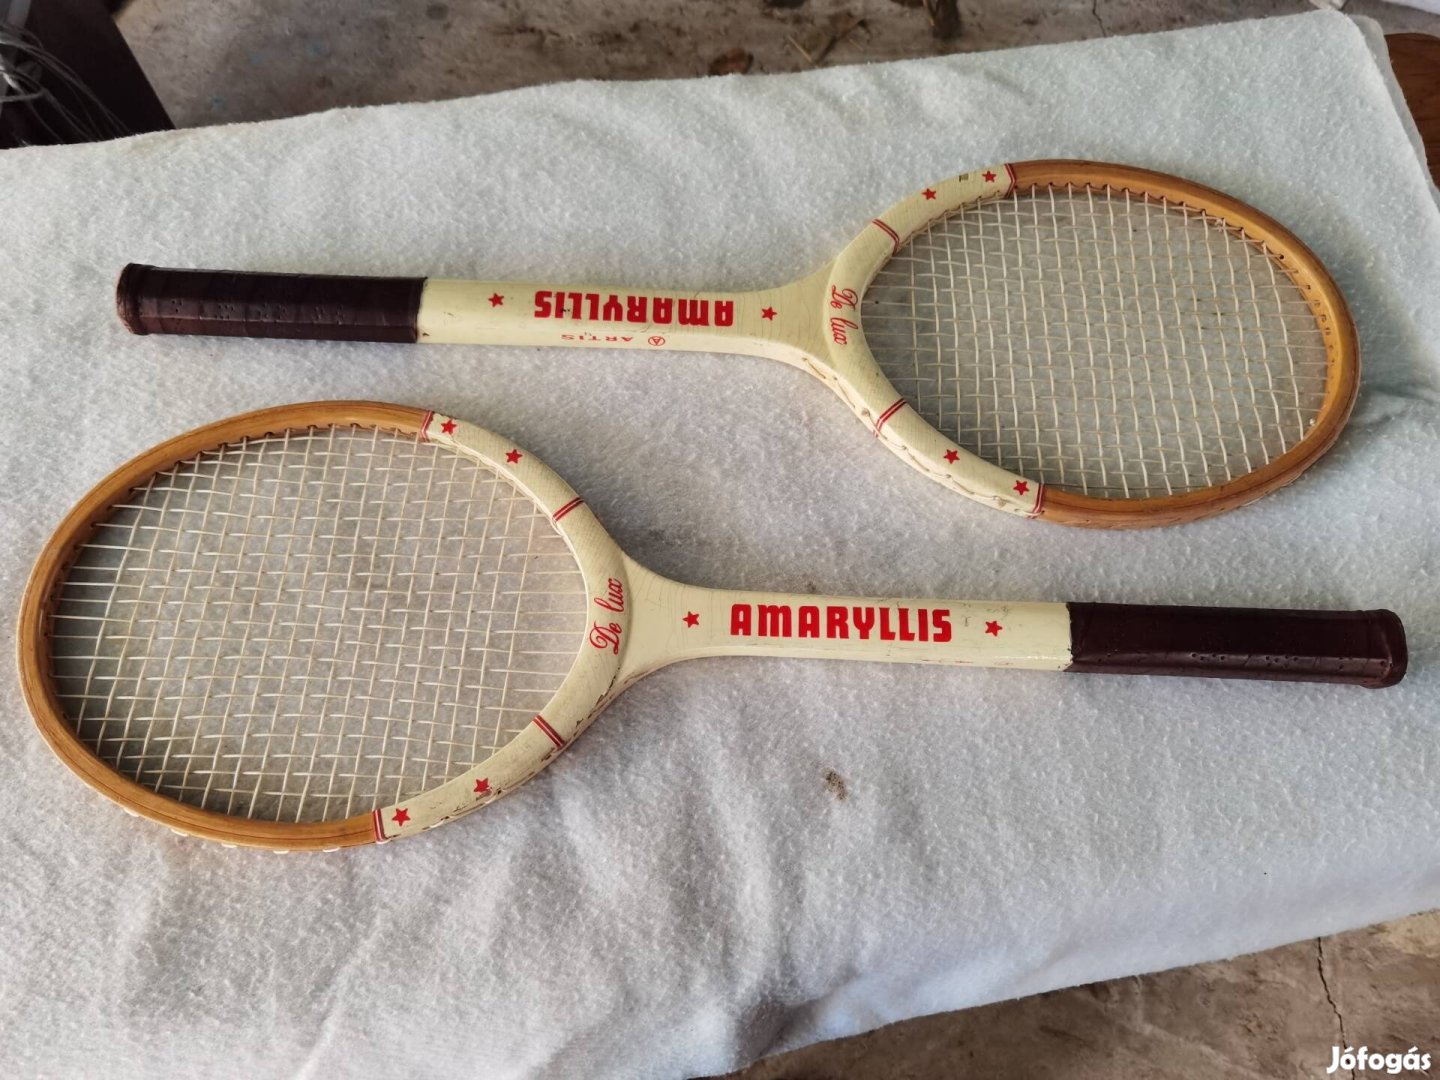 Amaryllis De Lux retro teniszütő